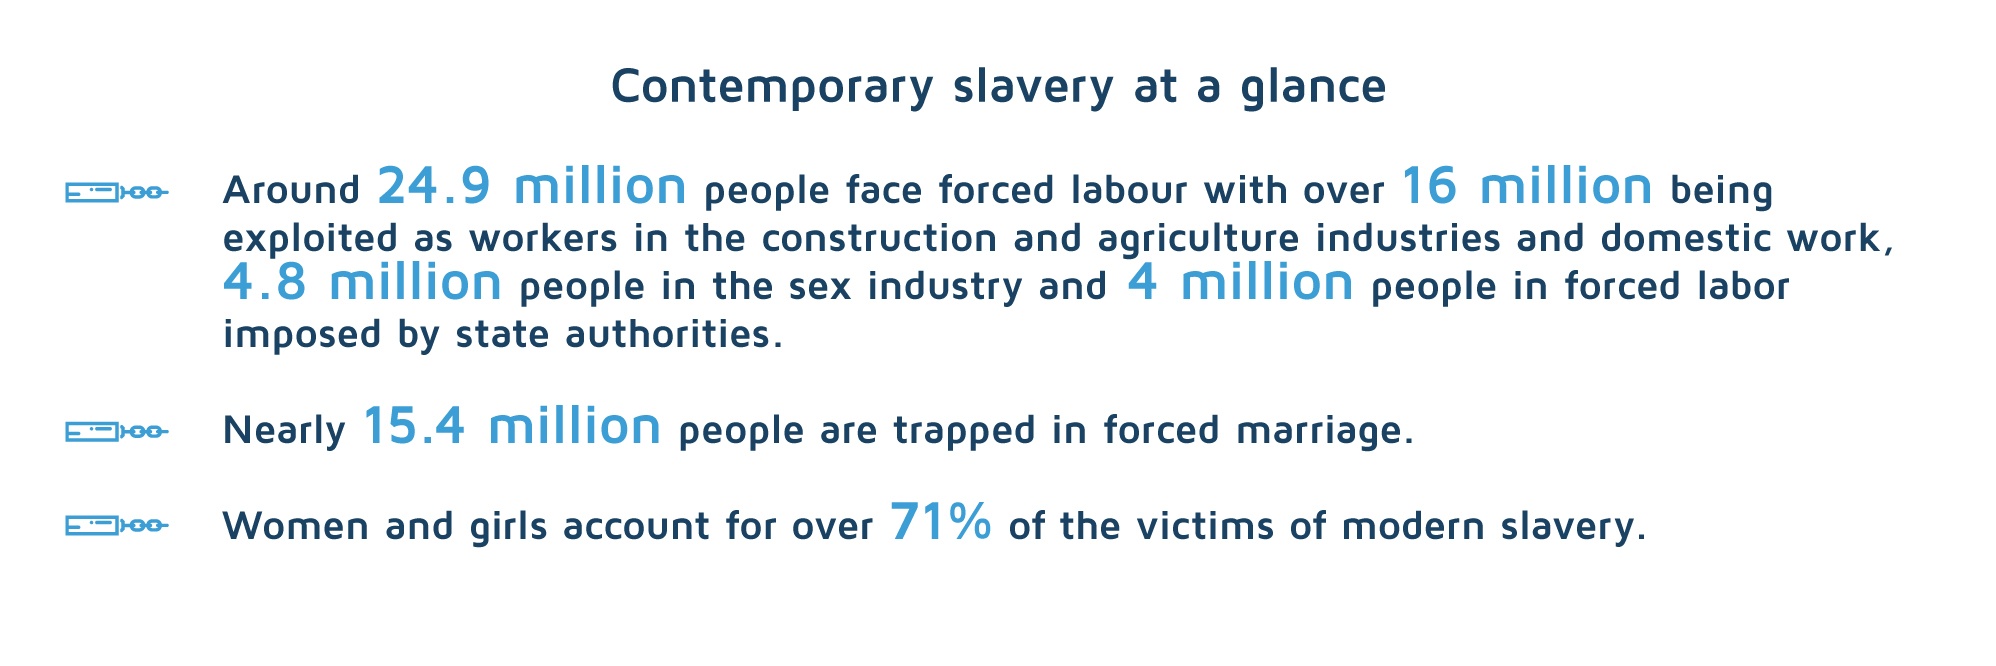 Contemporary slavery at glance